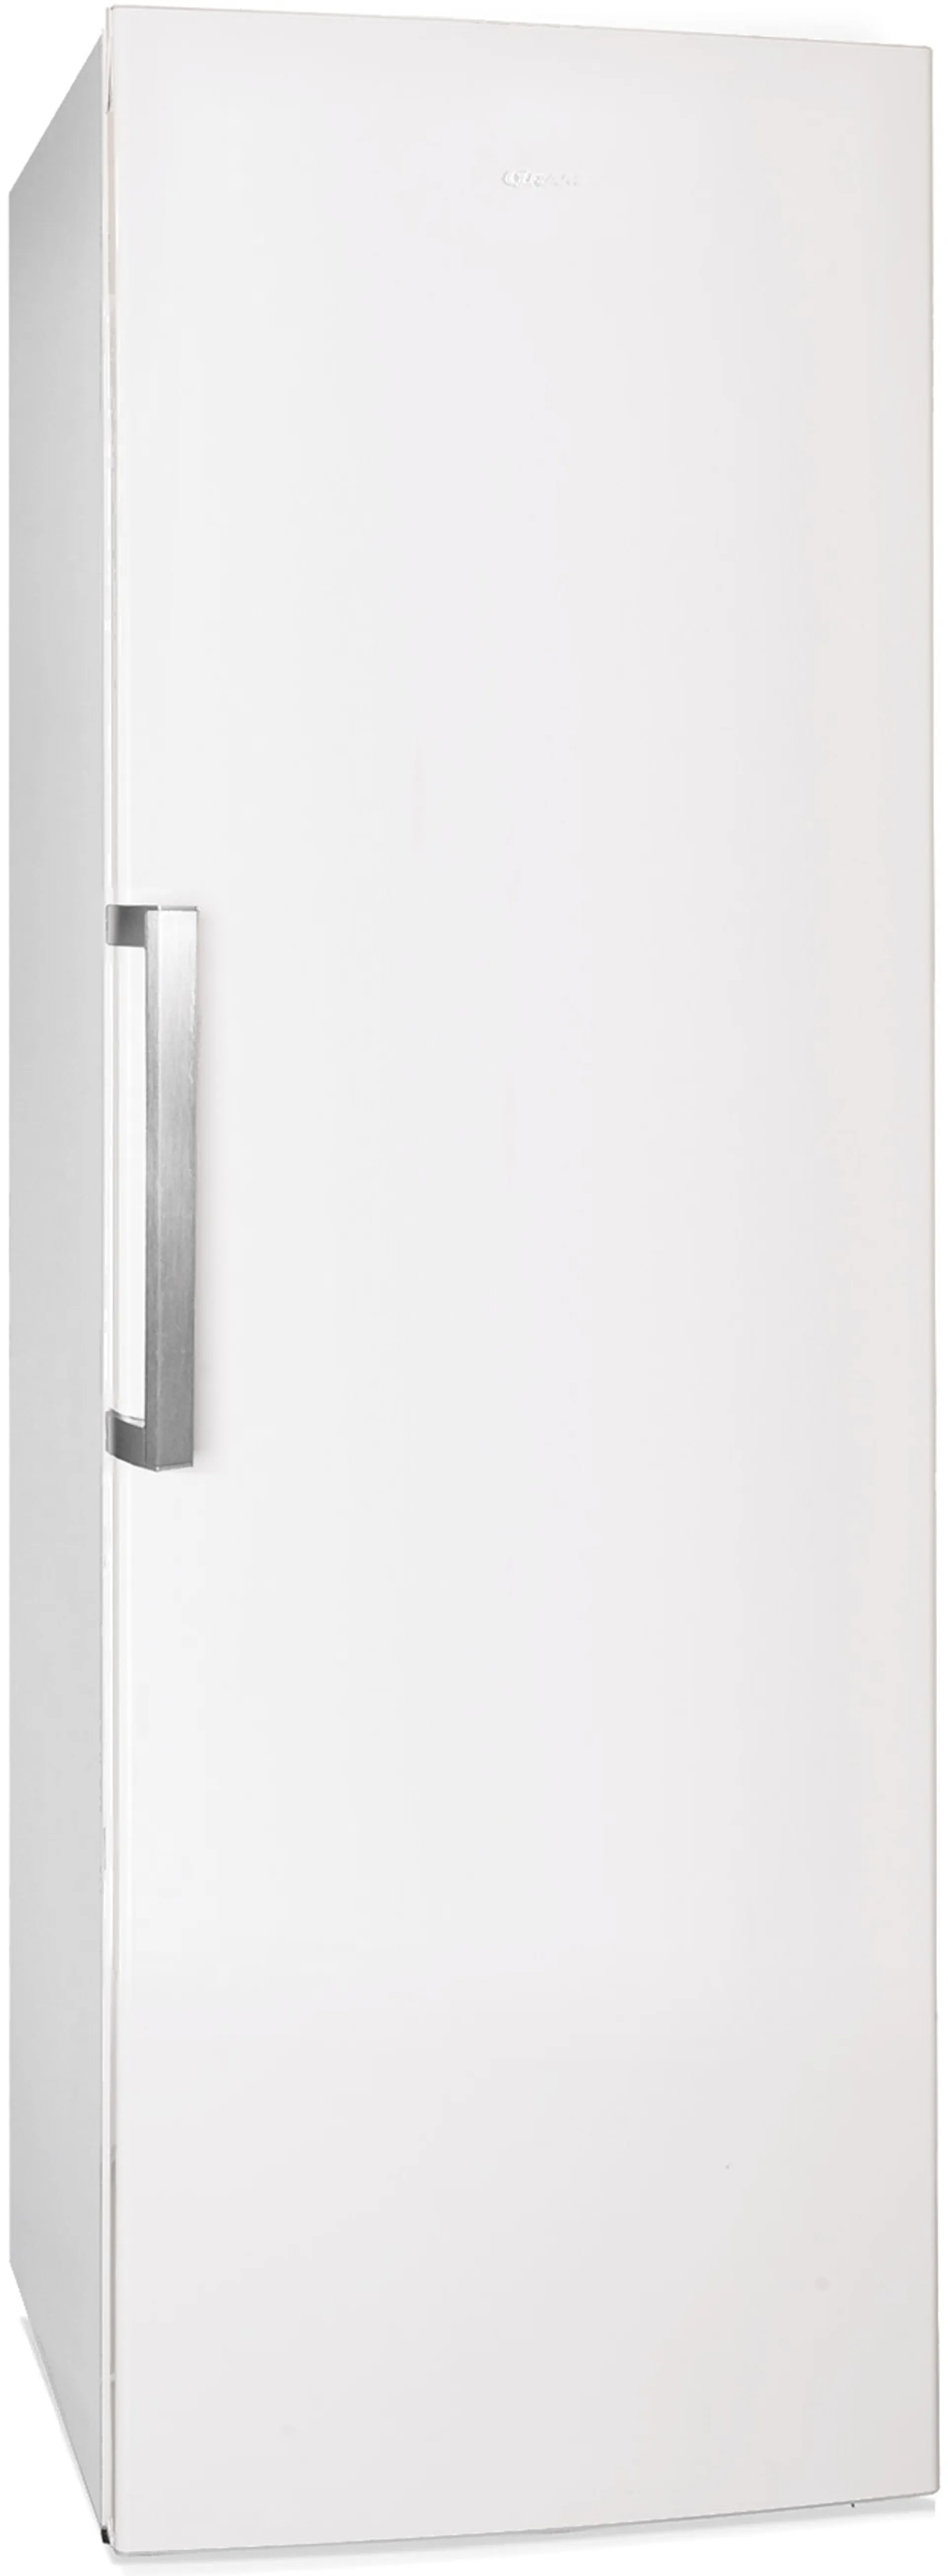 Gram jääkaappi KS 441862/1 valkoinen - 1